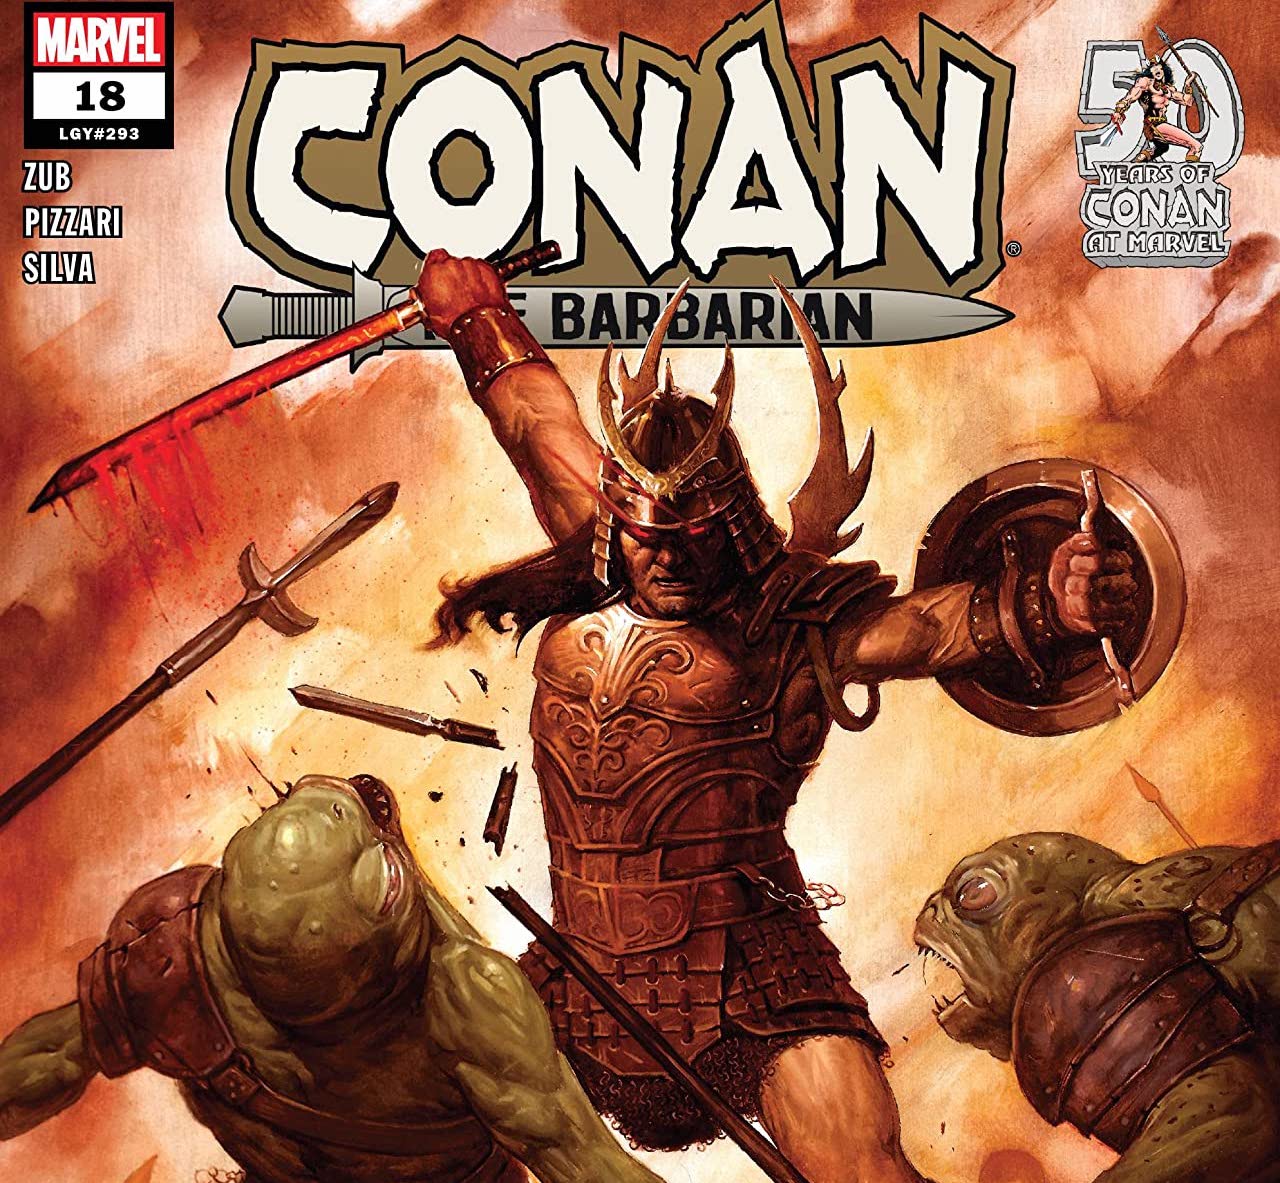 'Conan The Barbarian' #18 review